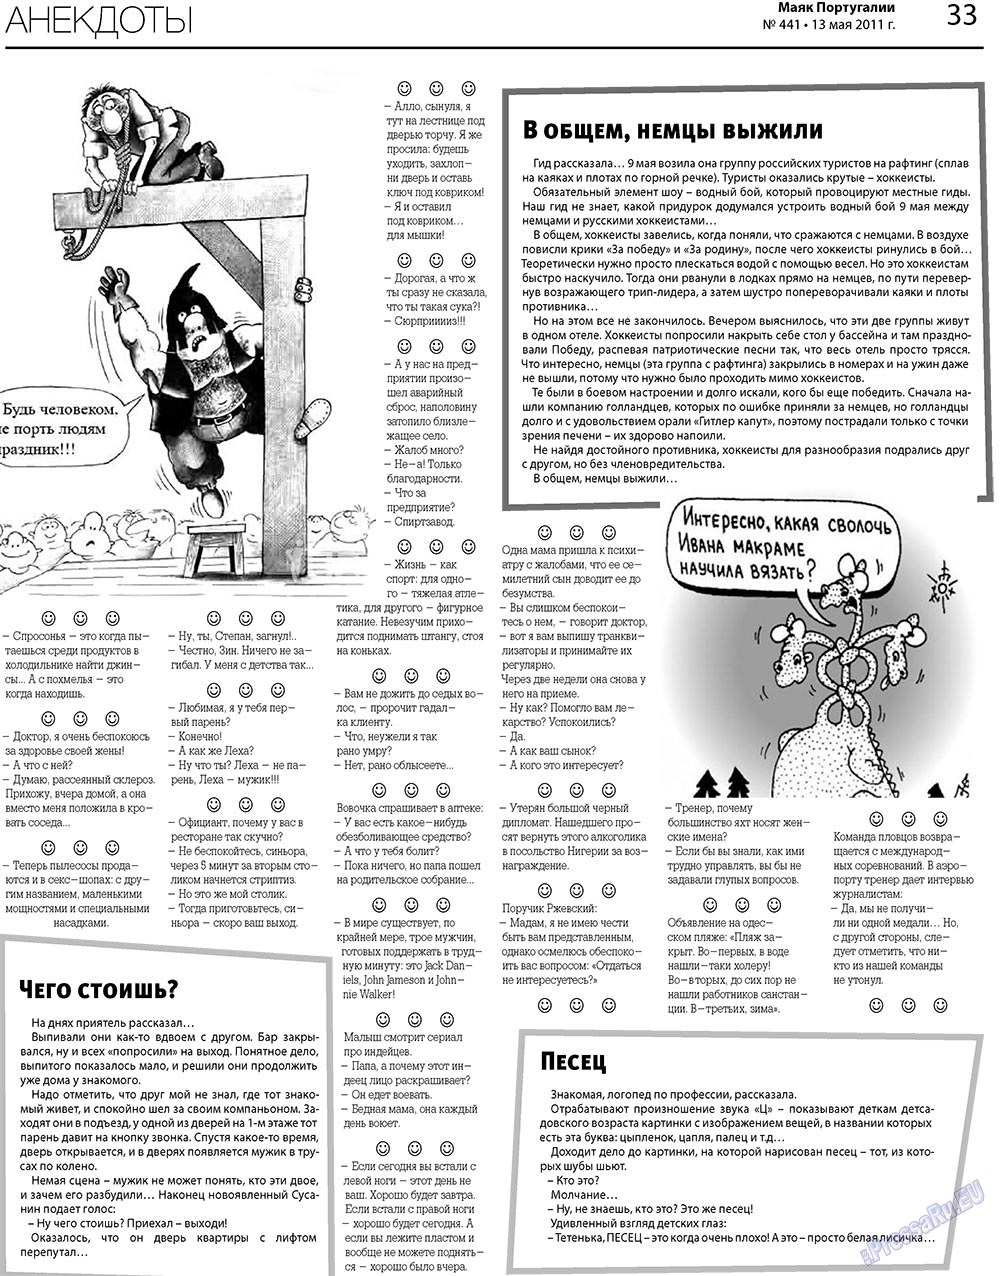 Маяк Португалии, газета. 2011 №441 стр.33